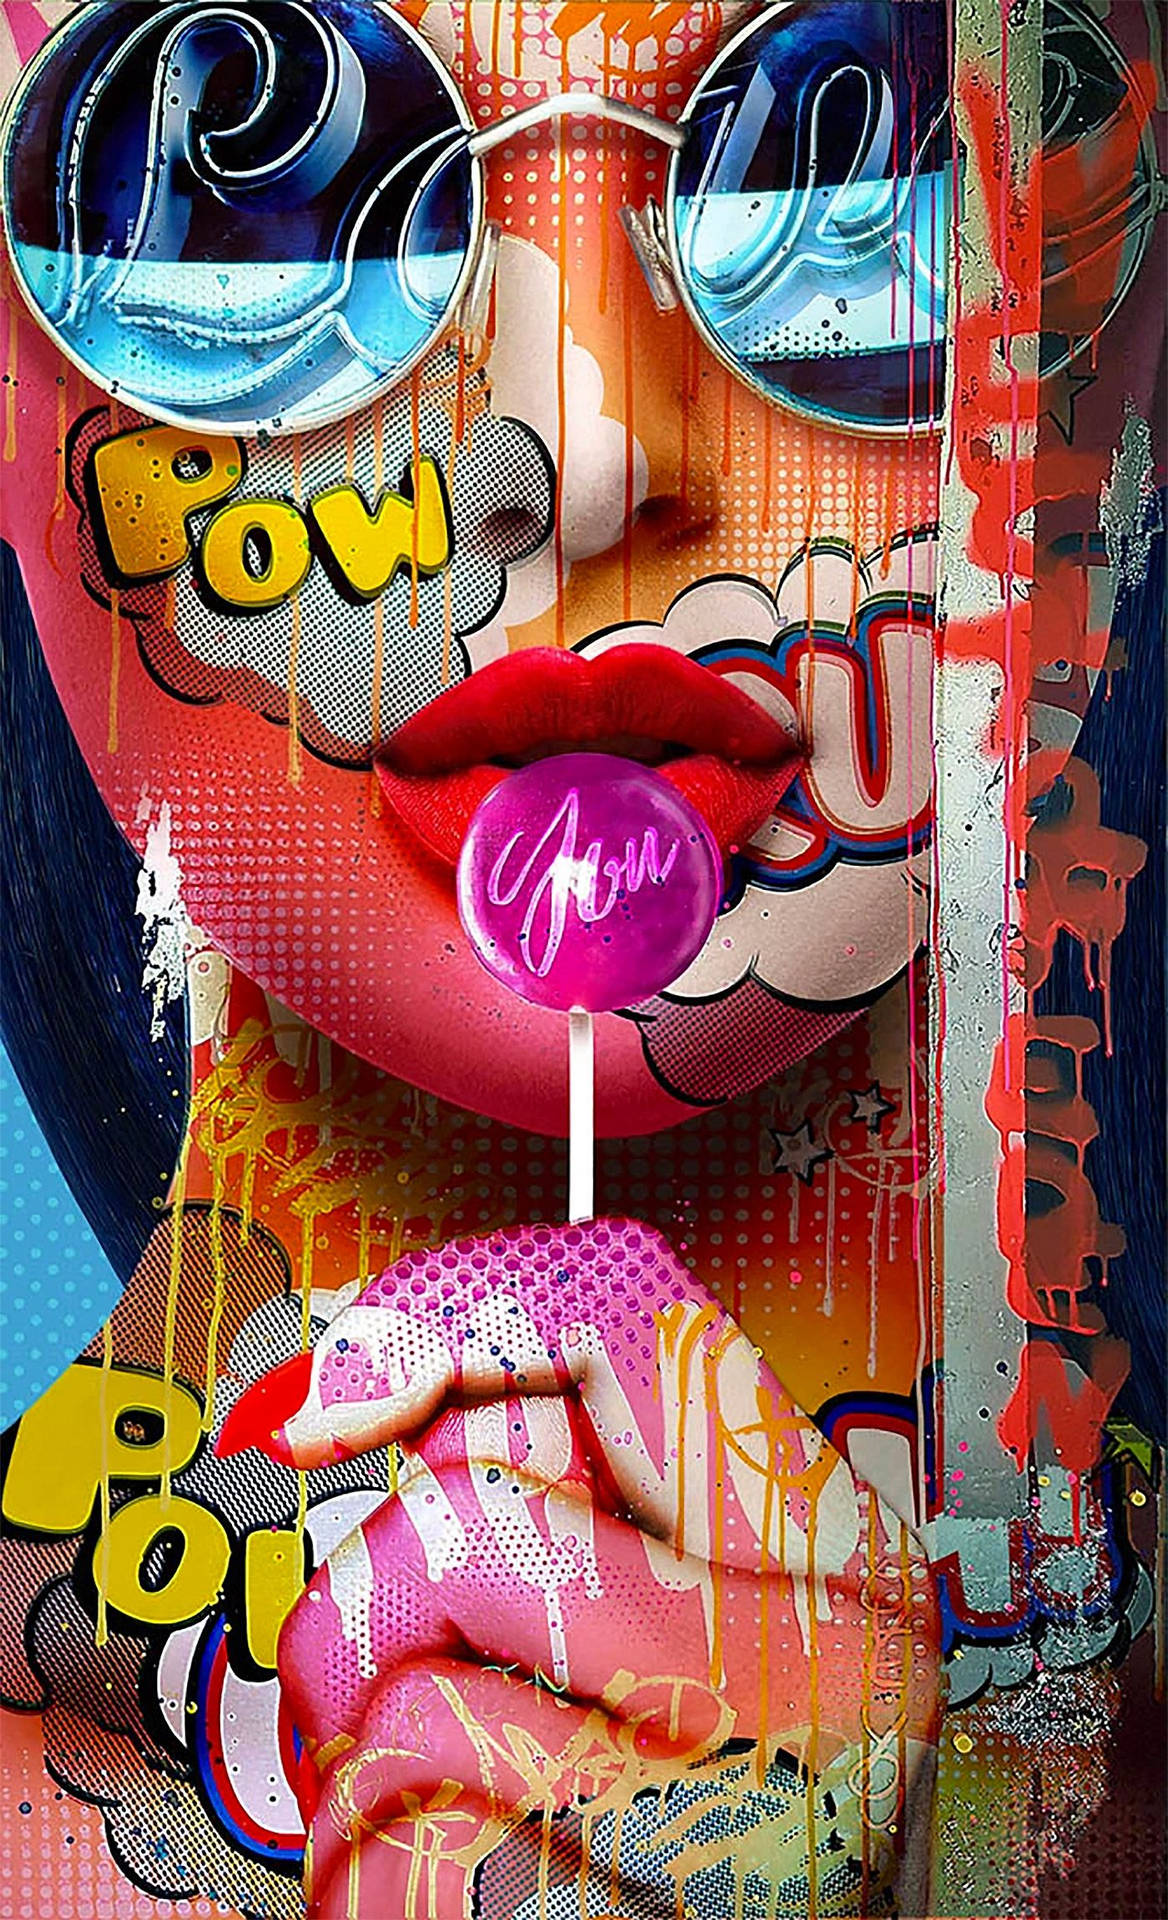 Free Pop Art Wallpaper Downloads, [100+] Pop Art Wallpapers for FREE |  